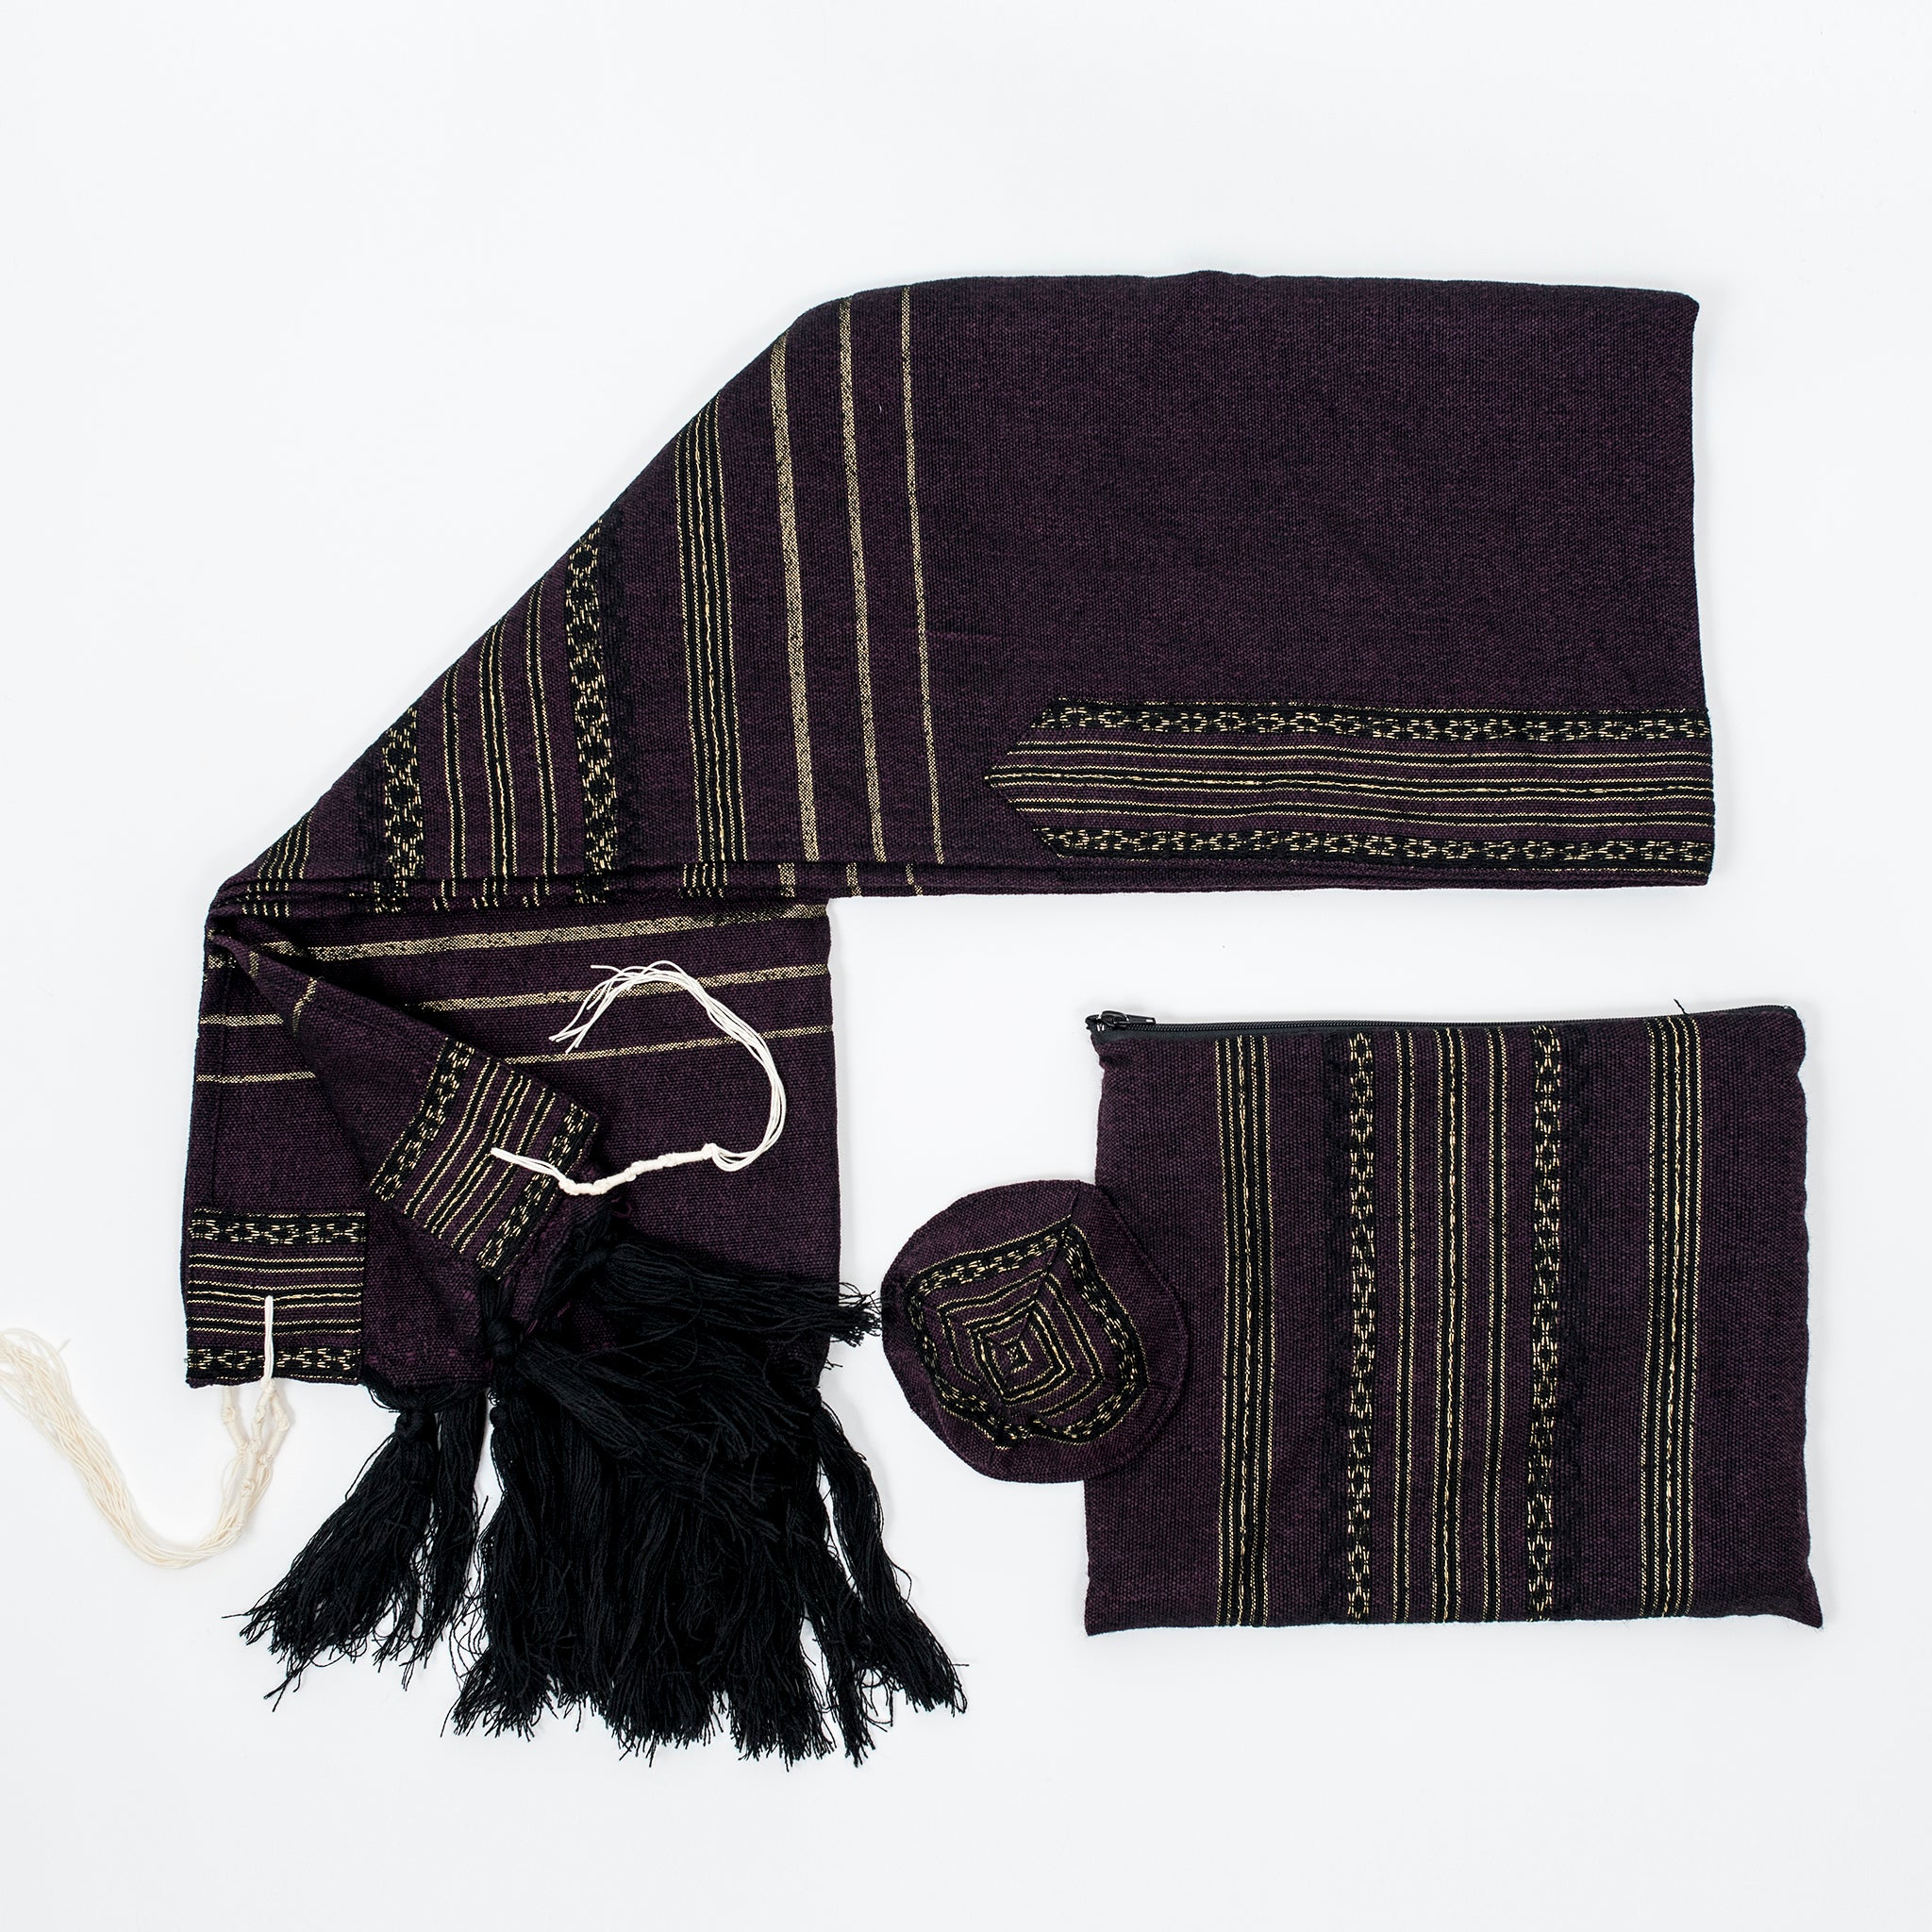 Hagar - Wool Tallit - Black and Gold Design on Purple